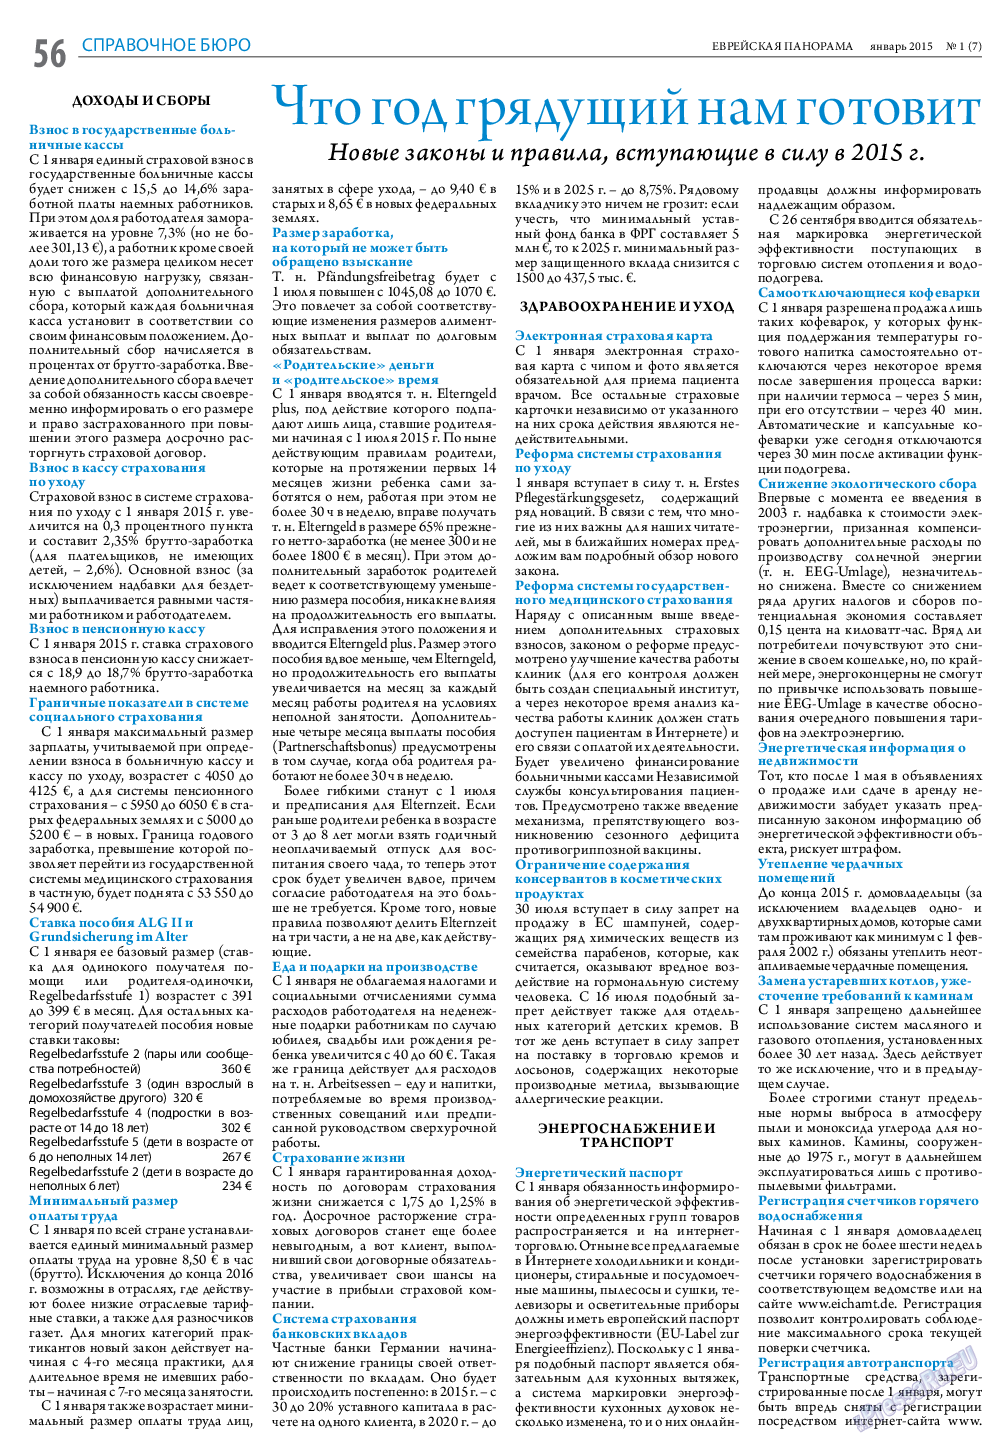 Еврейская панорама, газета. 2015 №1 стр.56